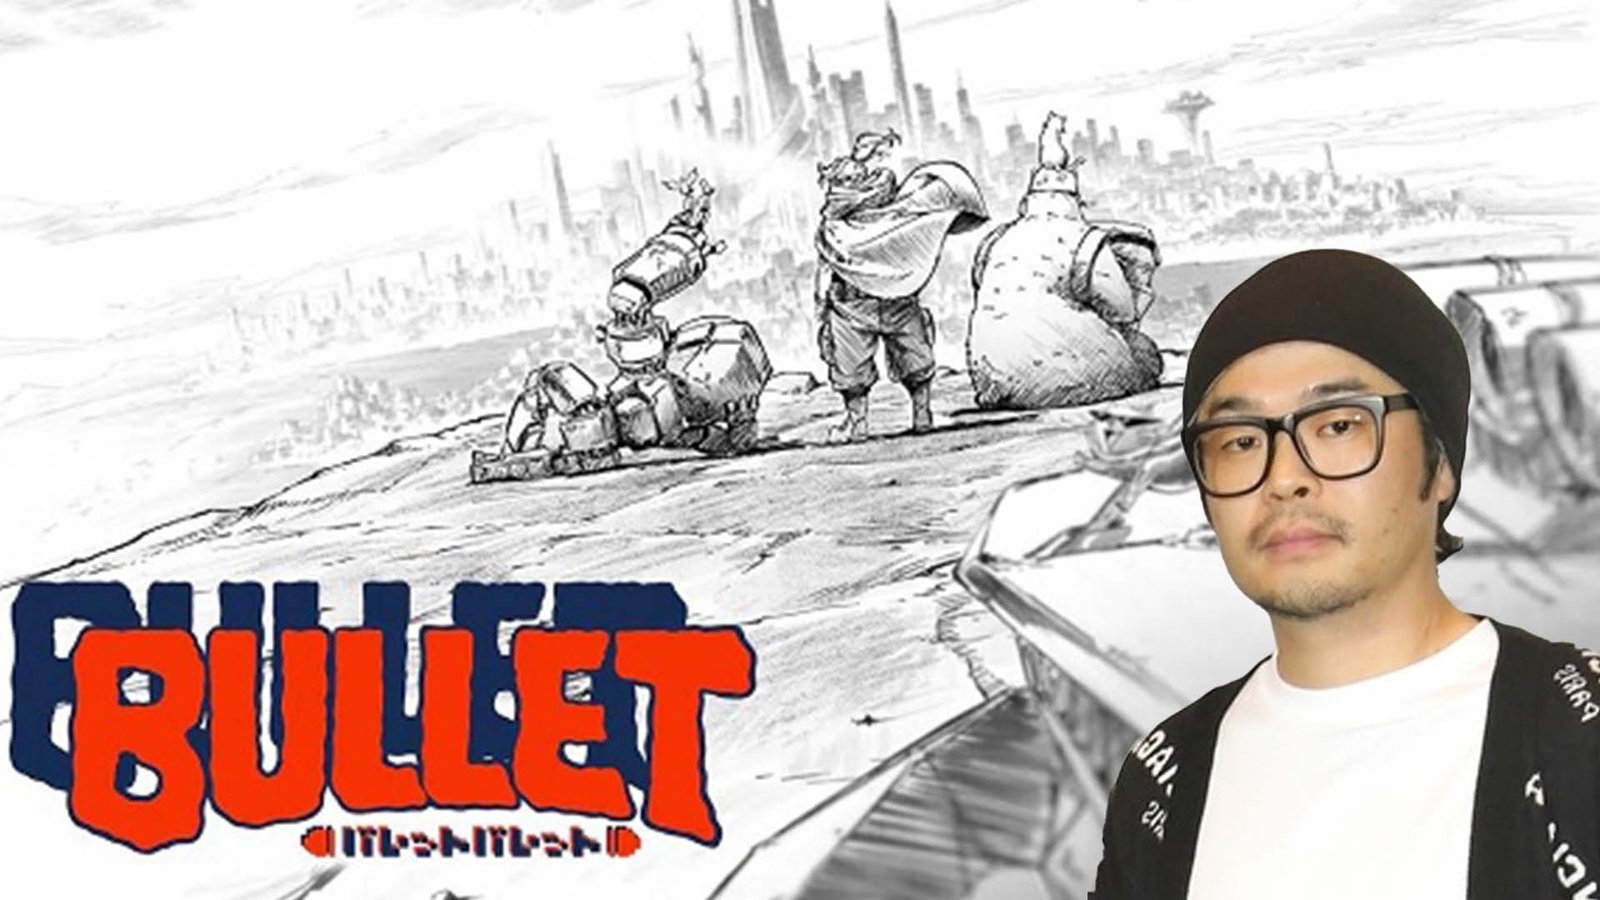 Bullet by JJK director Park Sunghoo